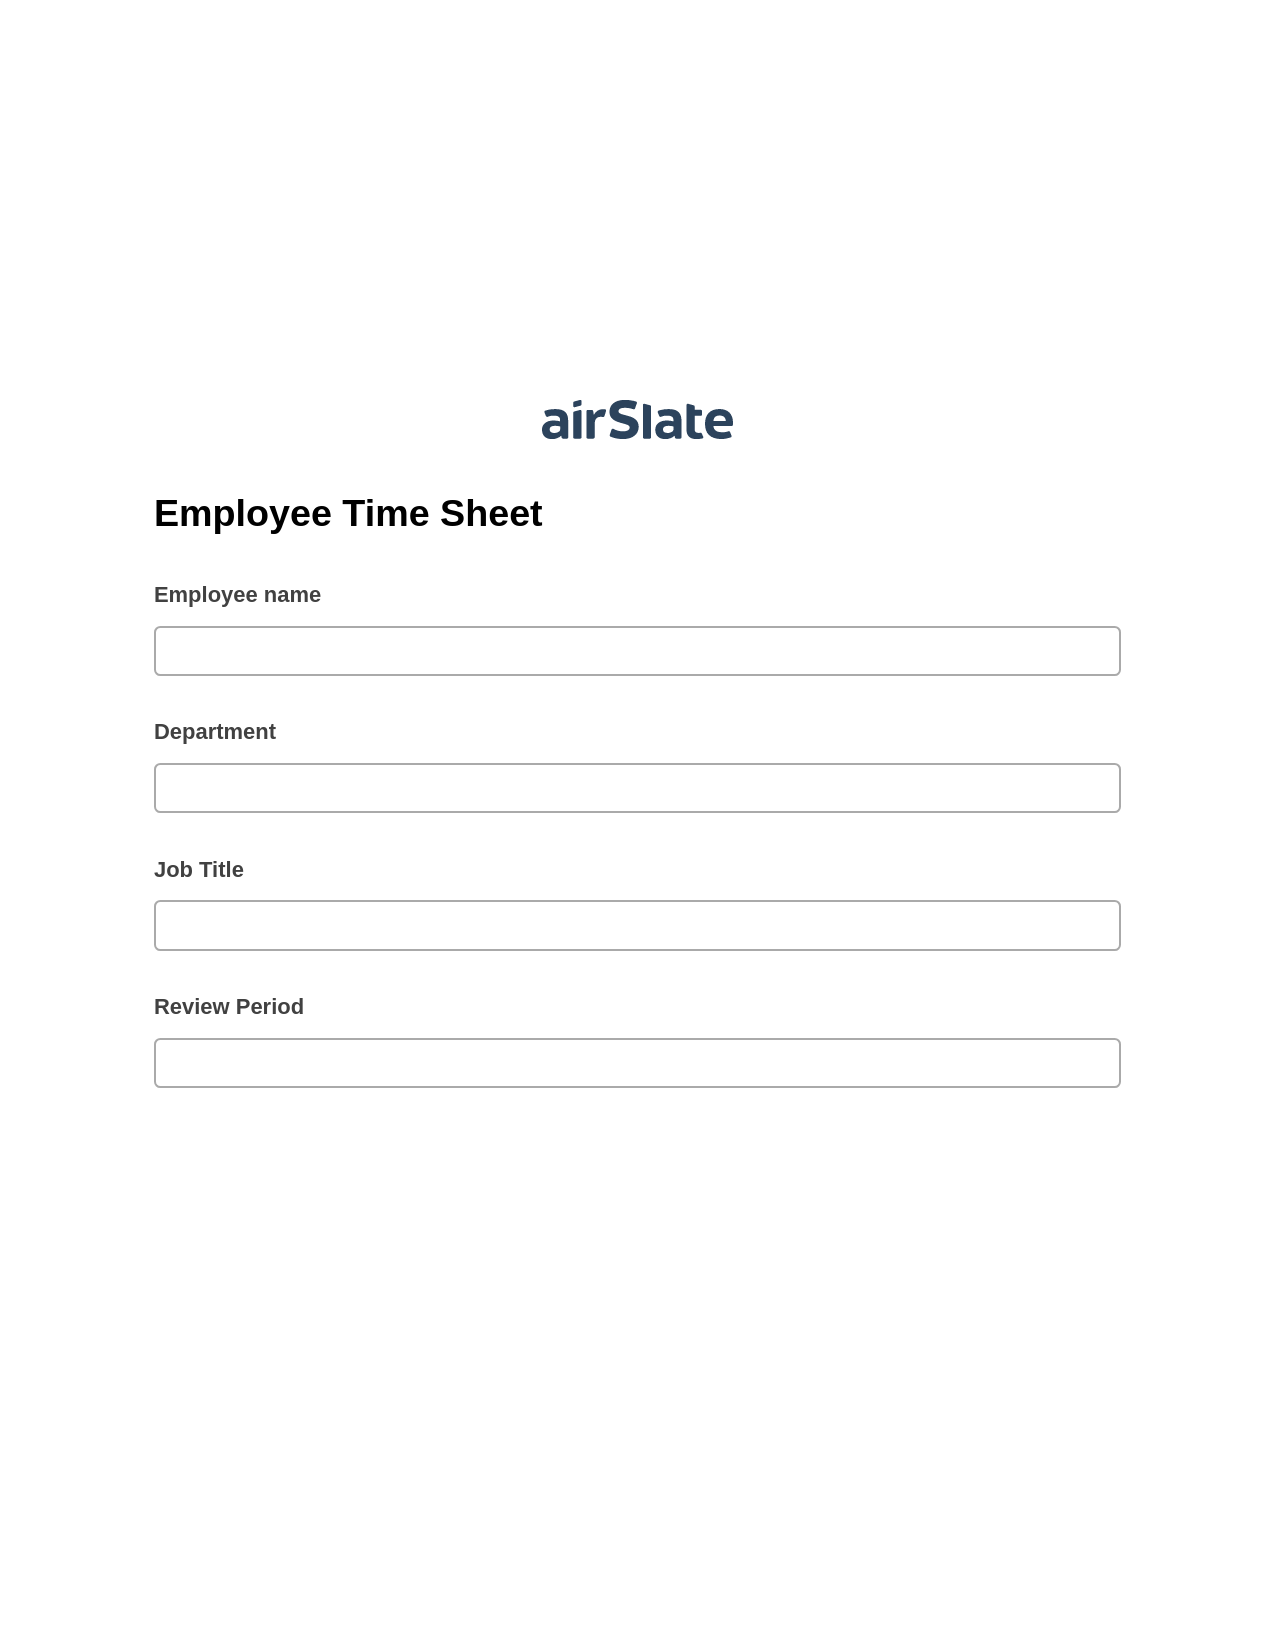 Employee Time Sheet Pre-fill from CSV File Bot, Create Salesforce Records Bot, Webhook Postfinish Bot